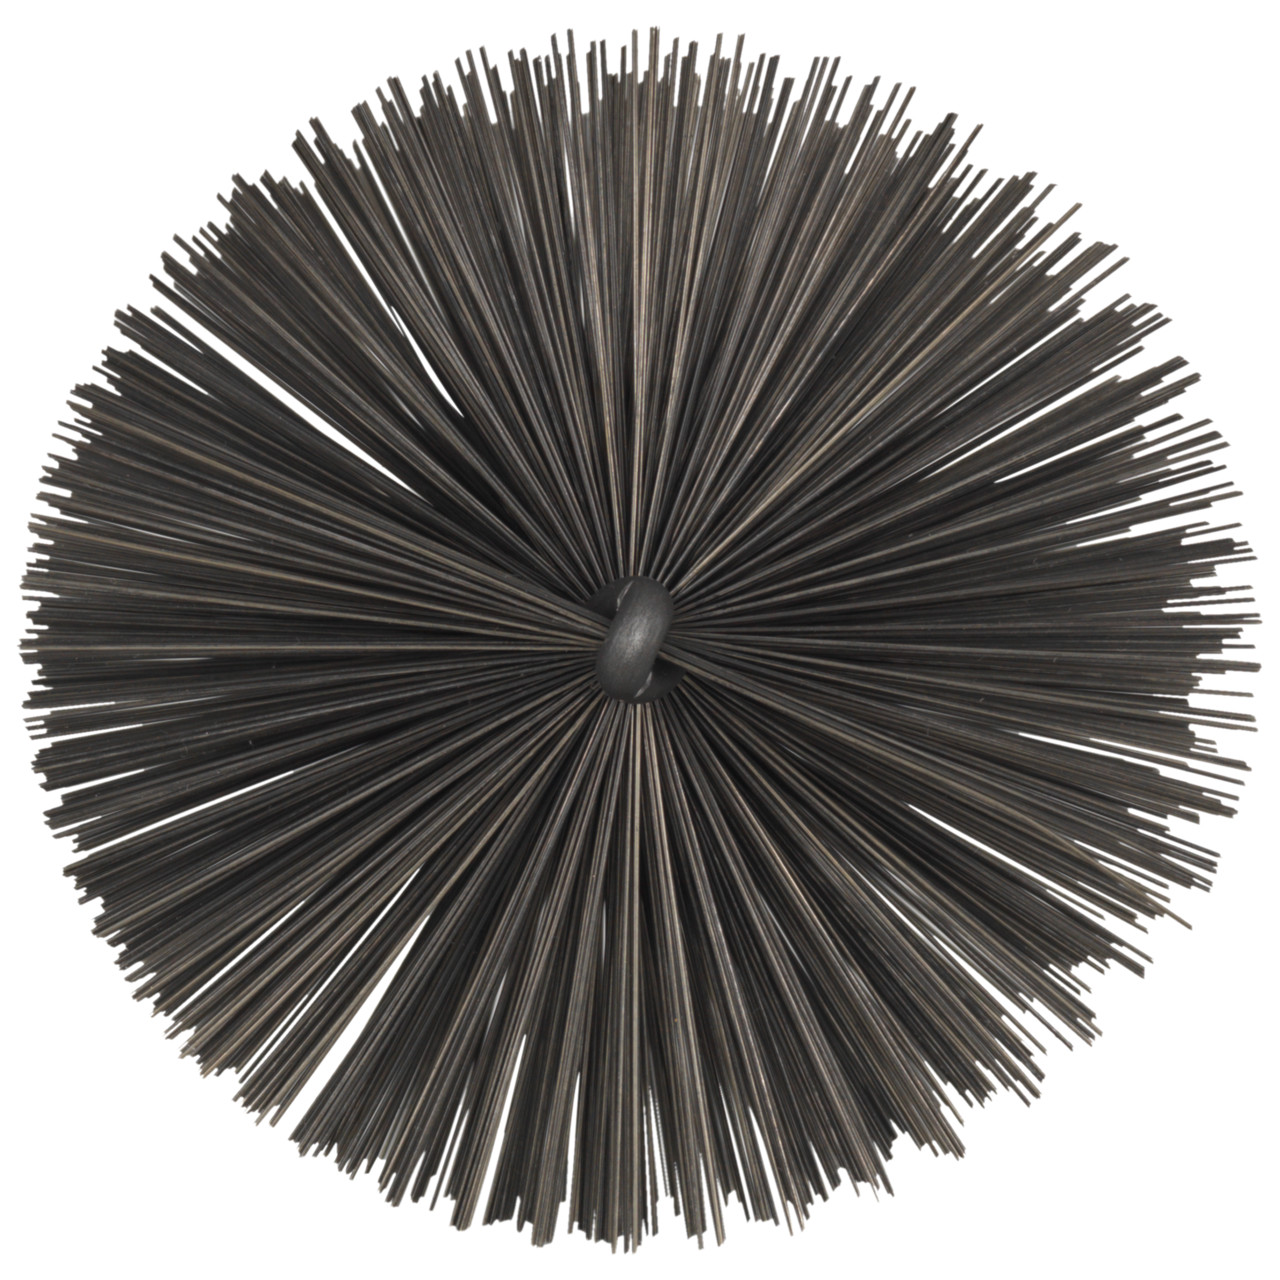 Tyrolit Buisborstel met buitendraad DxGE-I 75xB1/2-160 Voor staal, vorm: 18ROGDG - (buisborstel), Art. 34203607